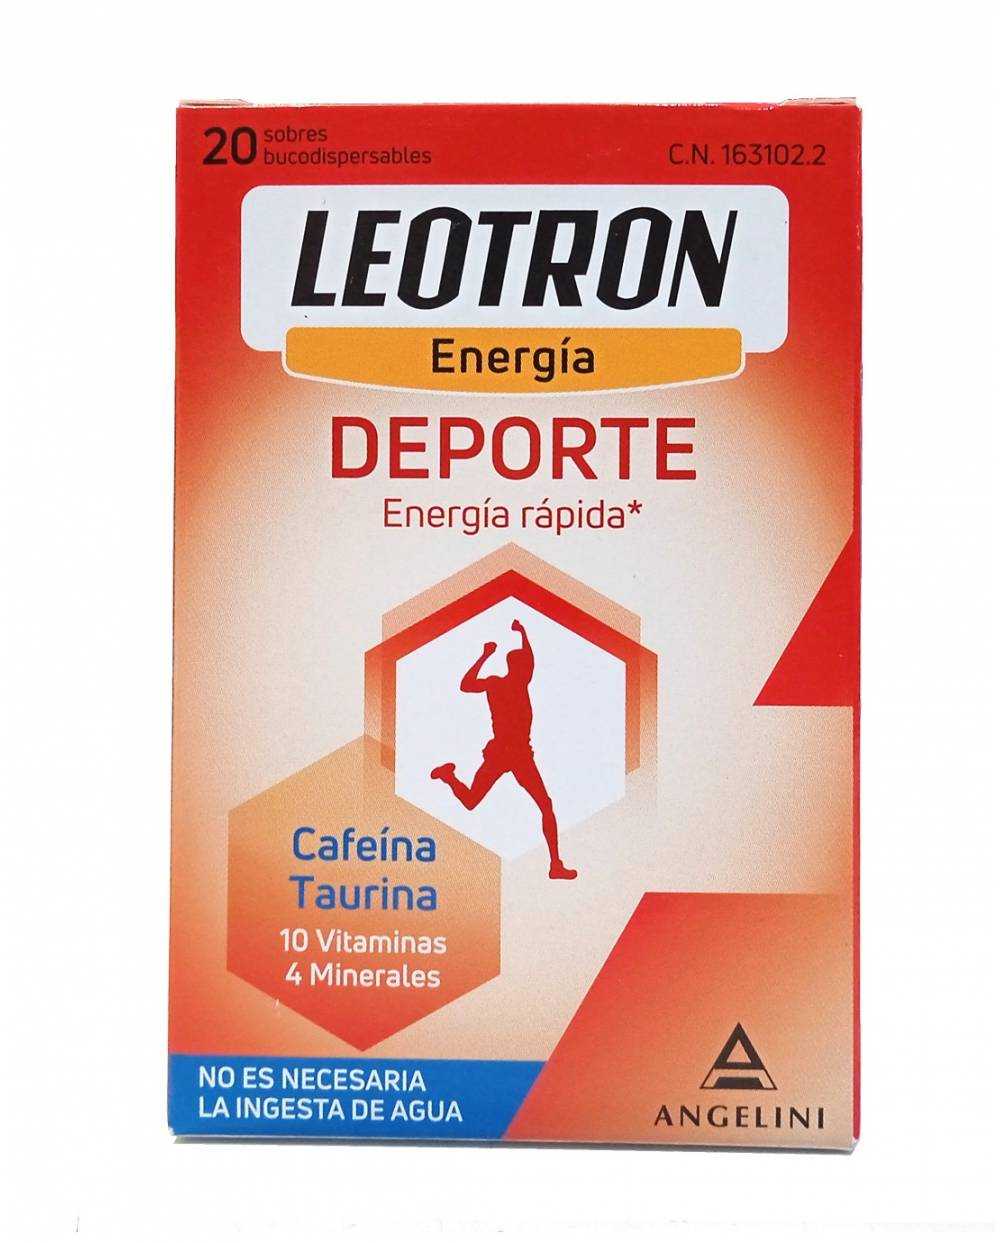 Leotron - Deporte - 20 sobres bucodispersables